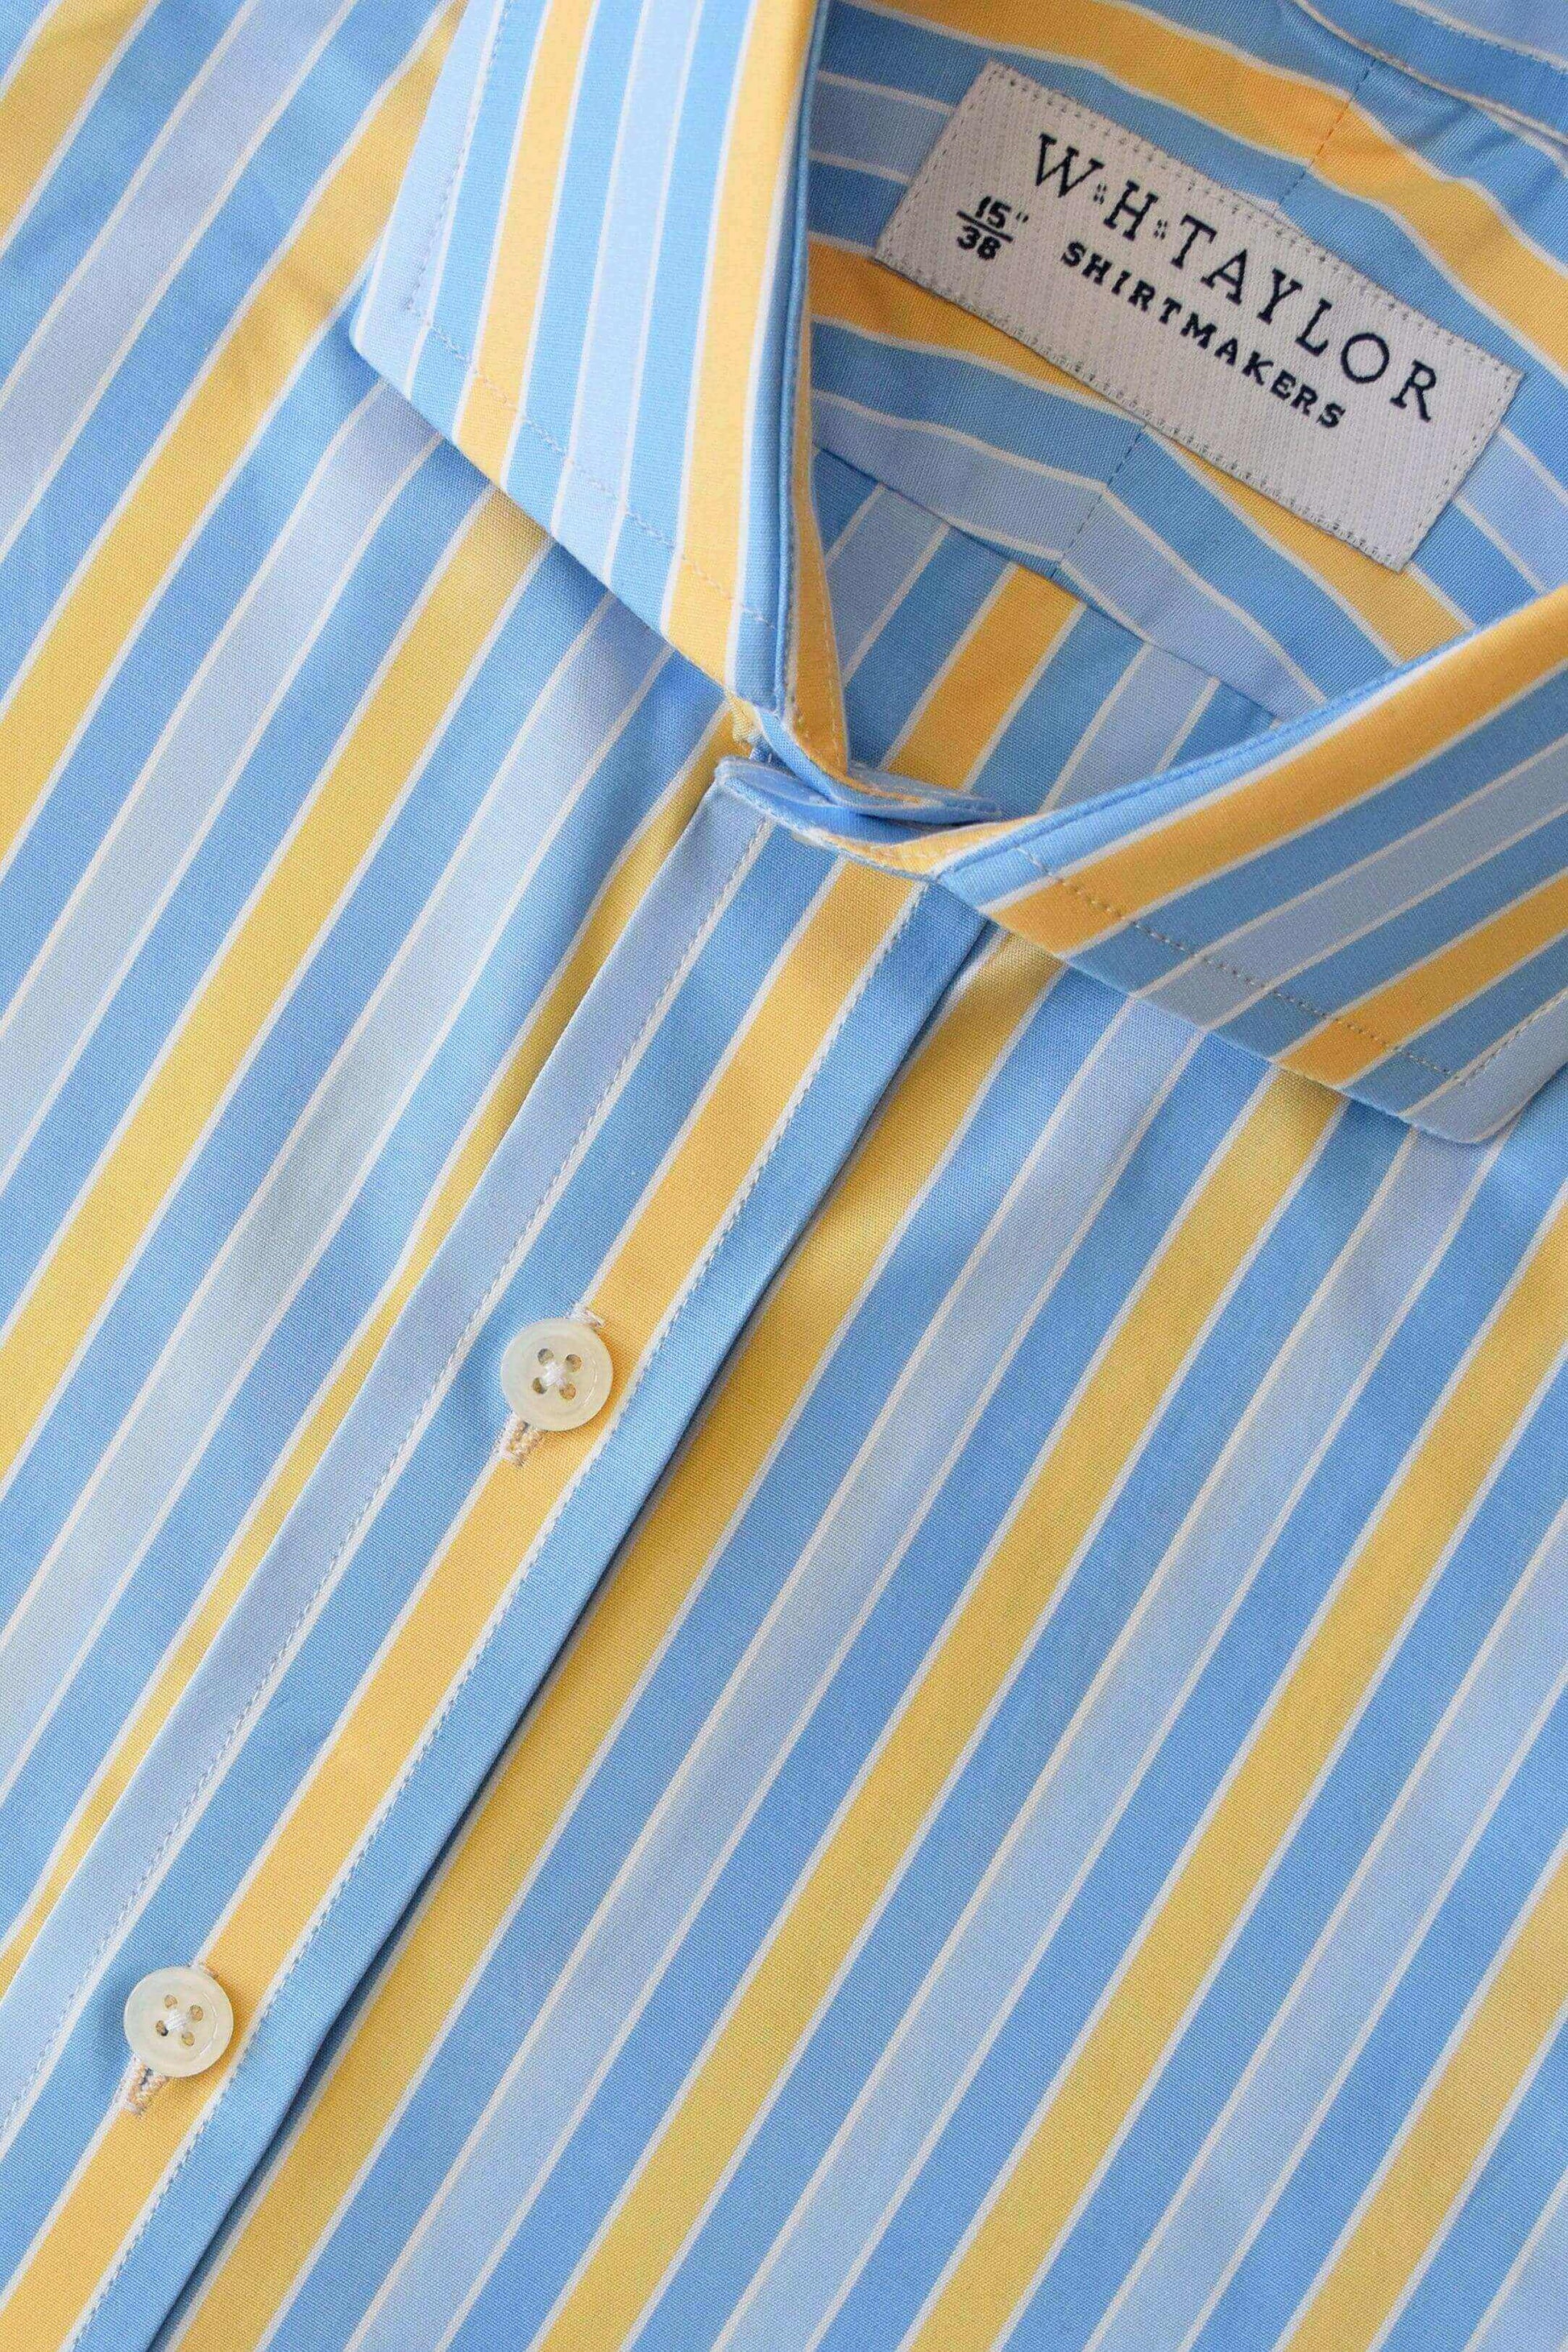 Blue Sky & Yellow Candy Stripe Poplin Ladies Bespoke Shirt - whtshirtmakers.com